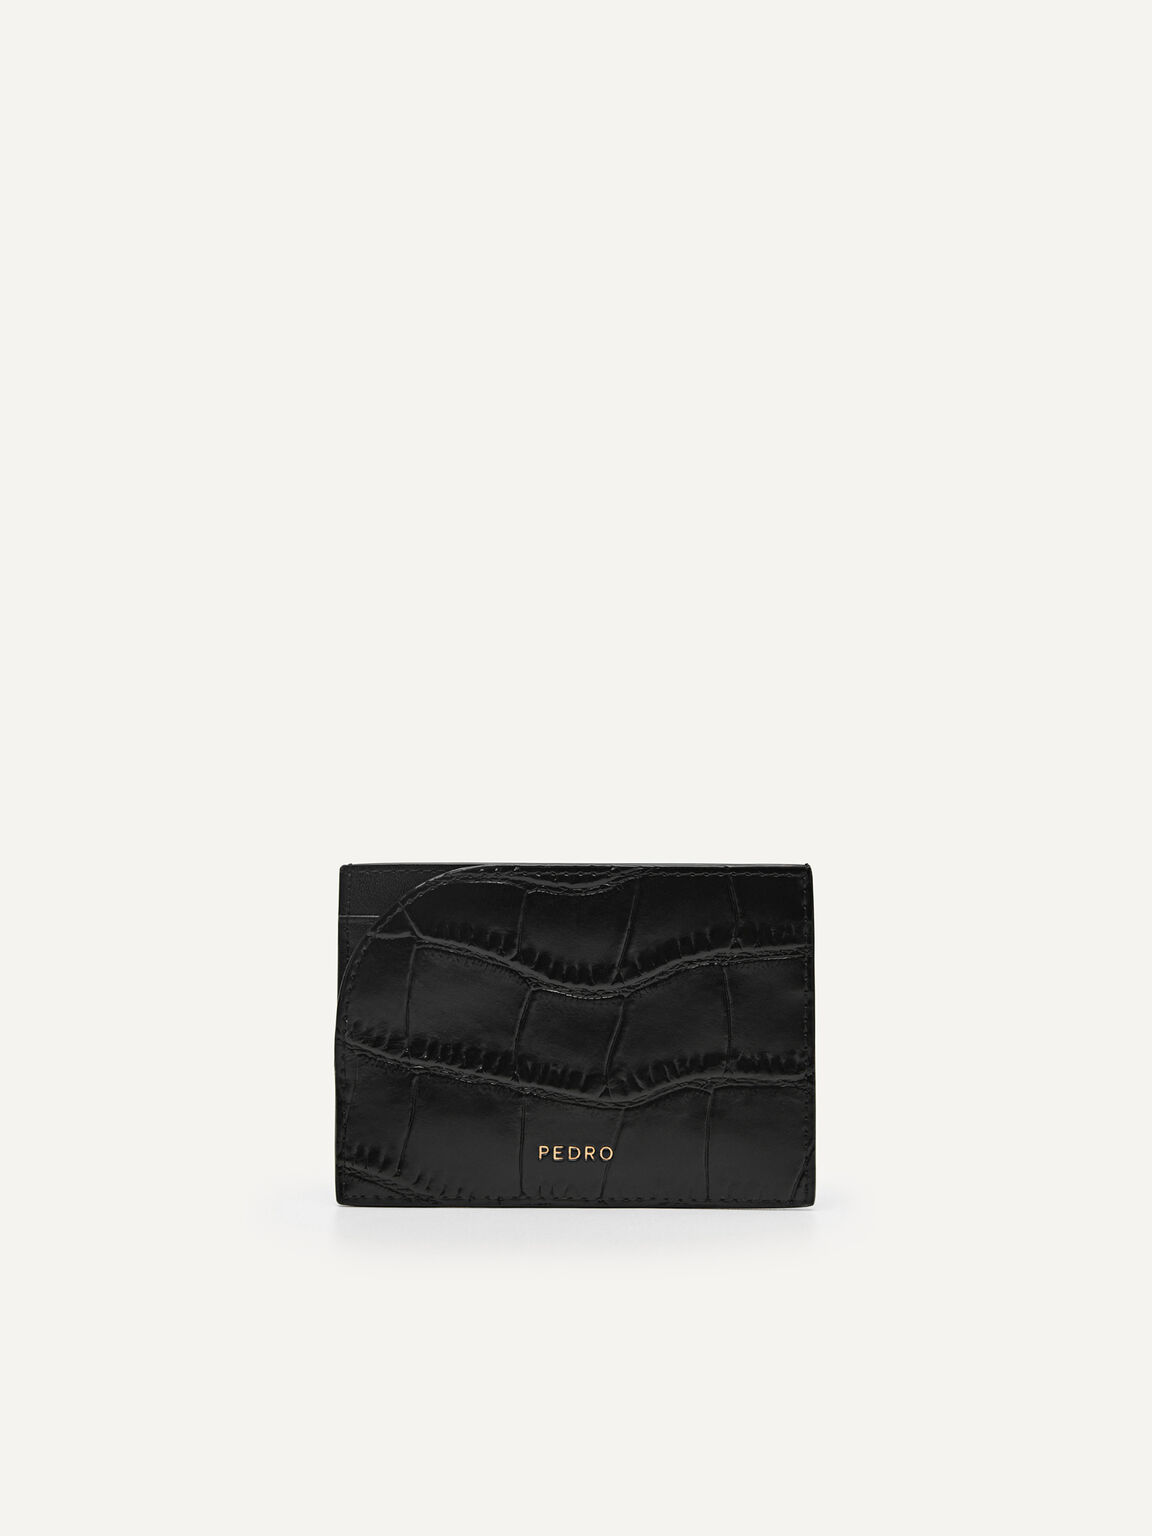 PEDRO Studio Leather Card Holder, Black, hi-res